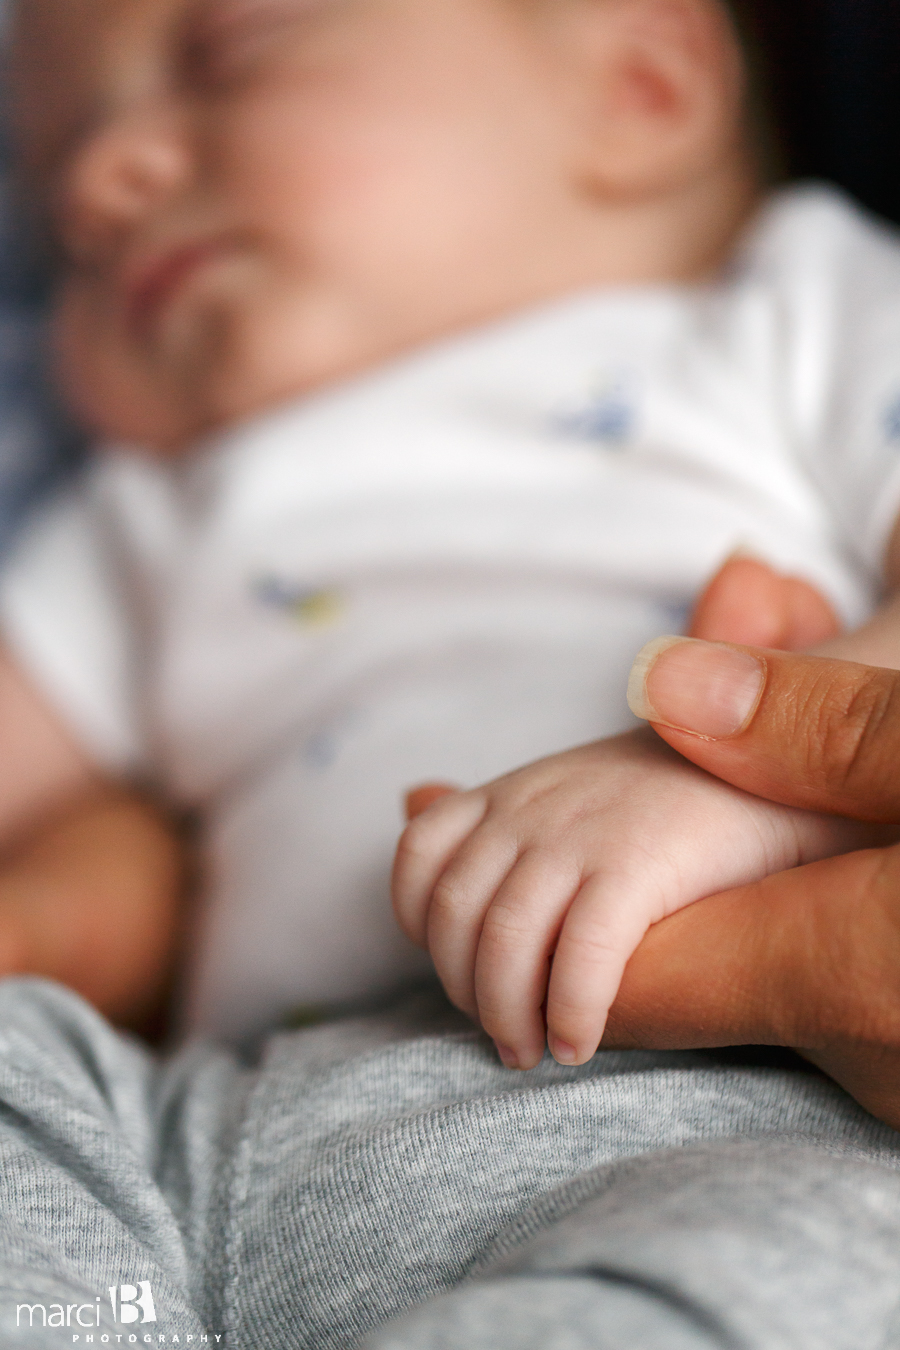 Corvallis Newborn Photography - baby photographer - preemie - baby hands